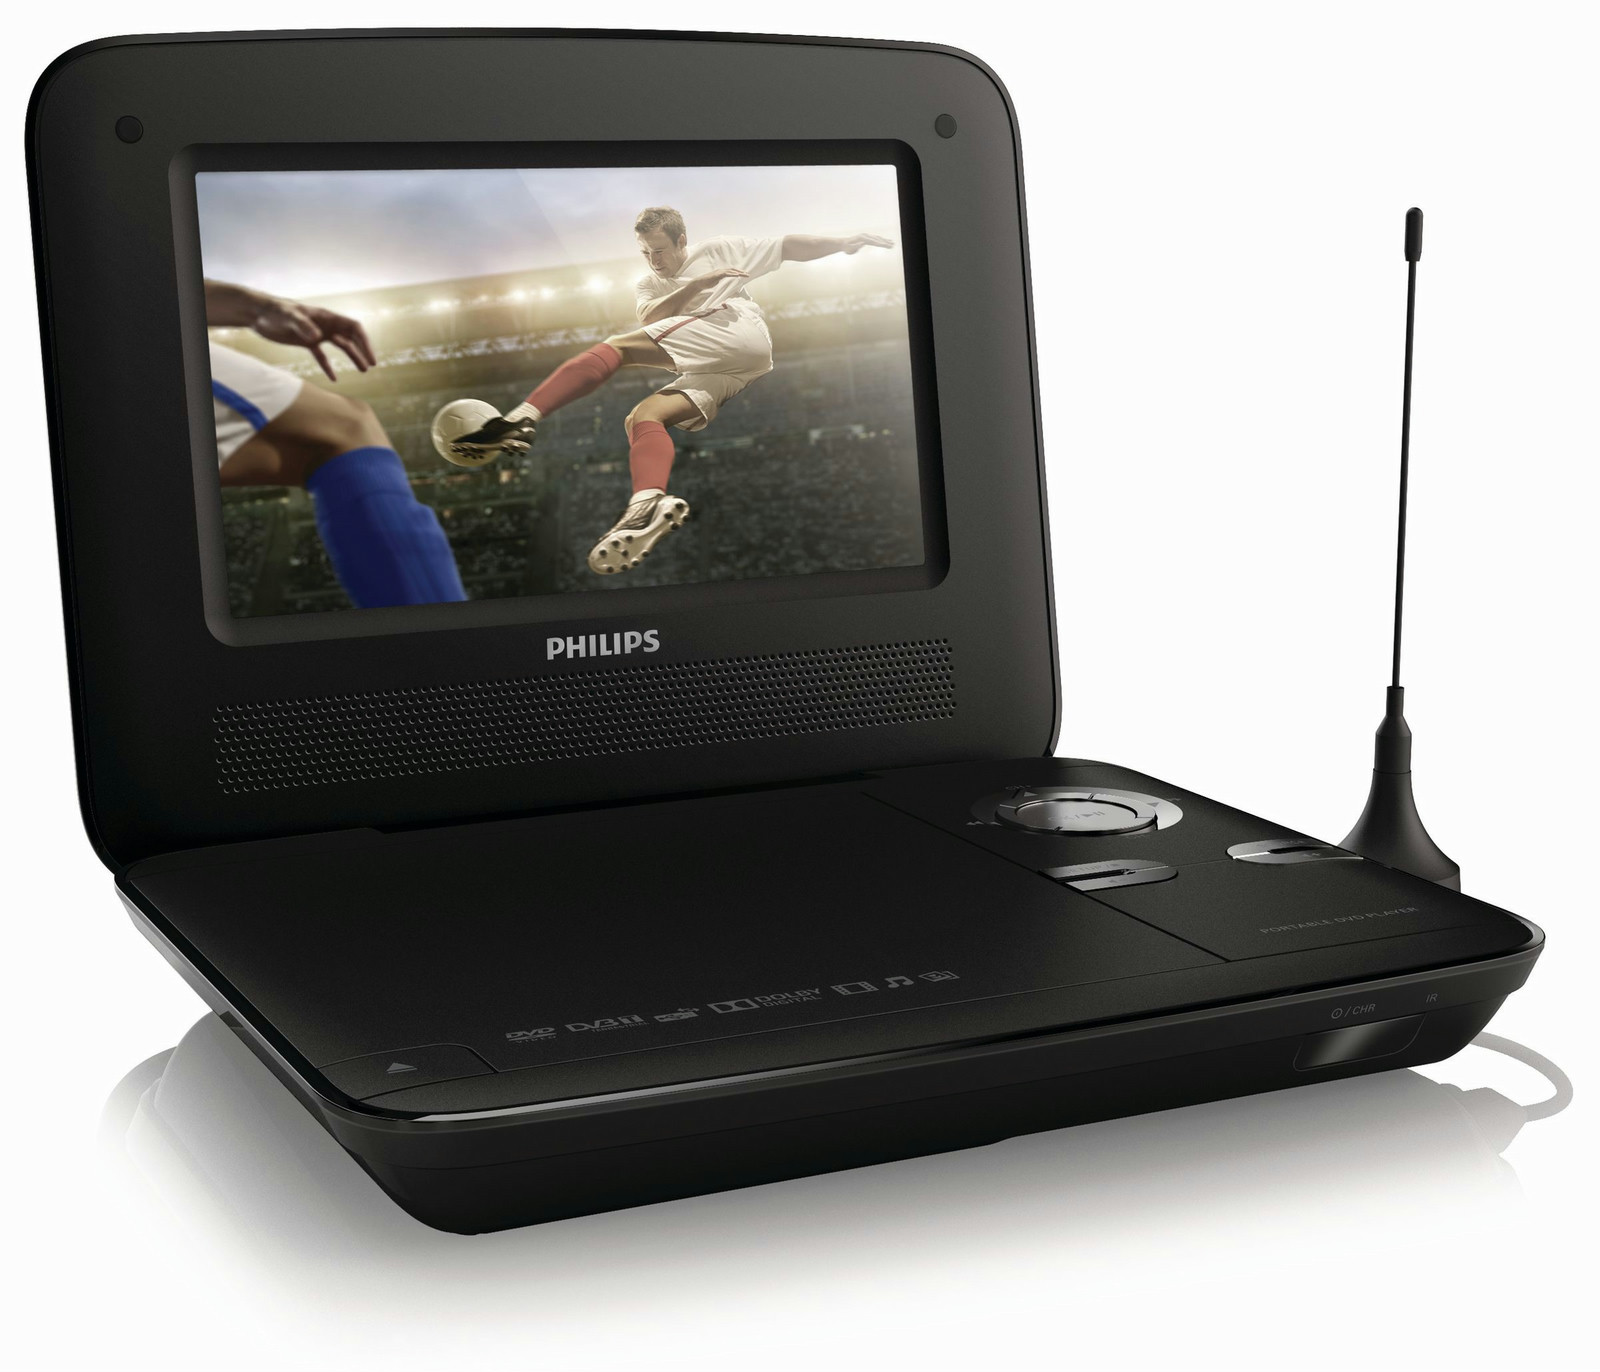 Philips портативный. DVD-плеер Philips pd7007. Портативный DVD плеер Philips pet704. Портативный DVD плеер Philips pet1002. Philips Portable DVD Player.